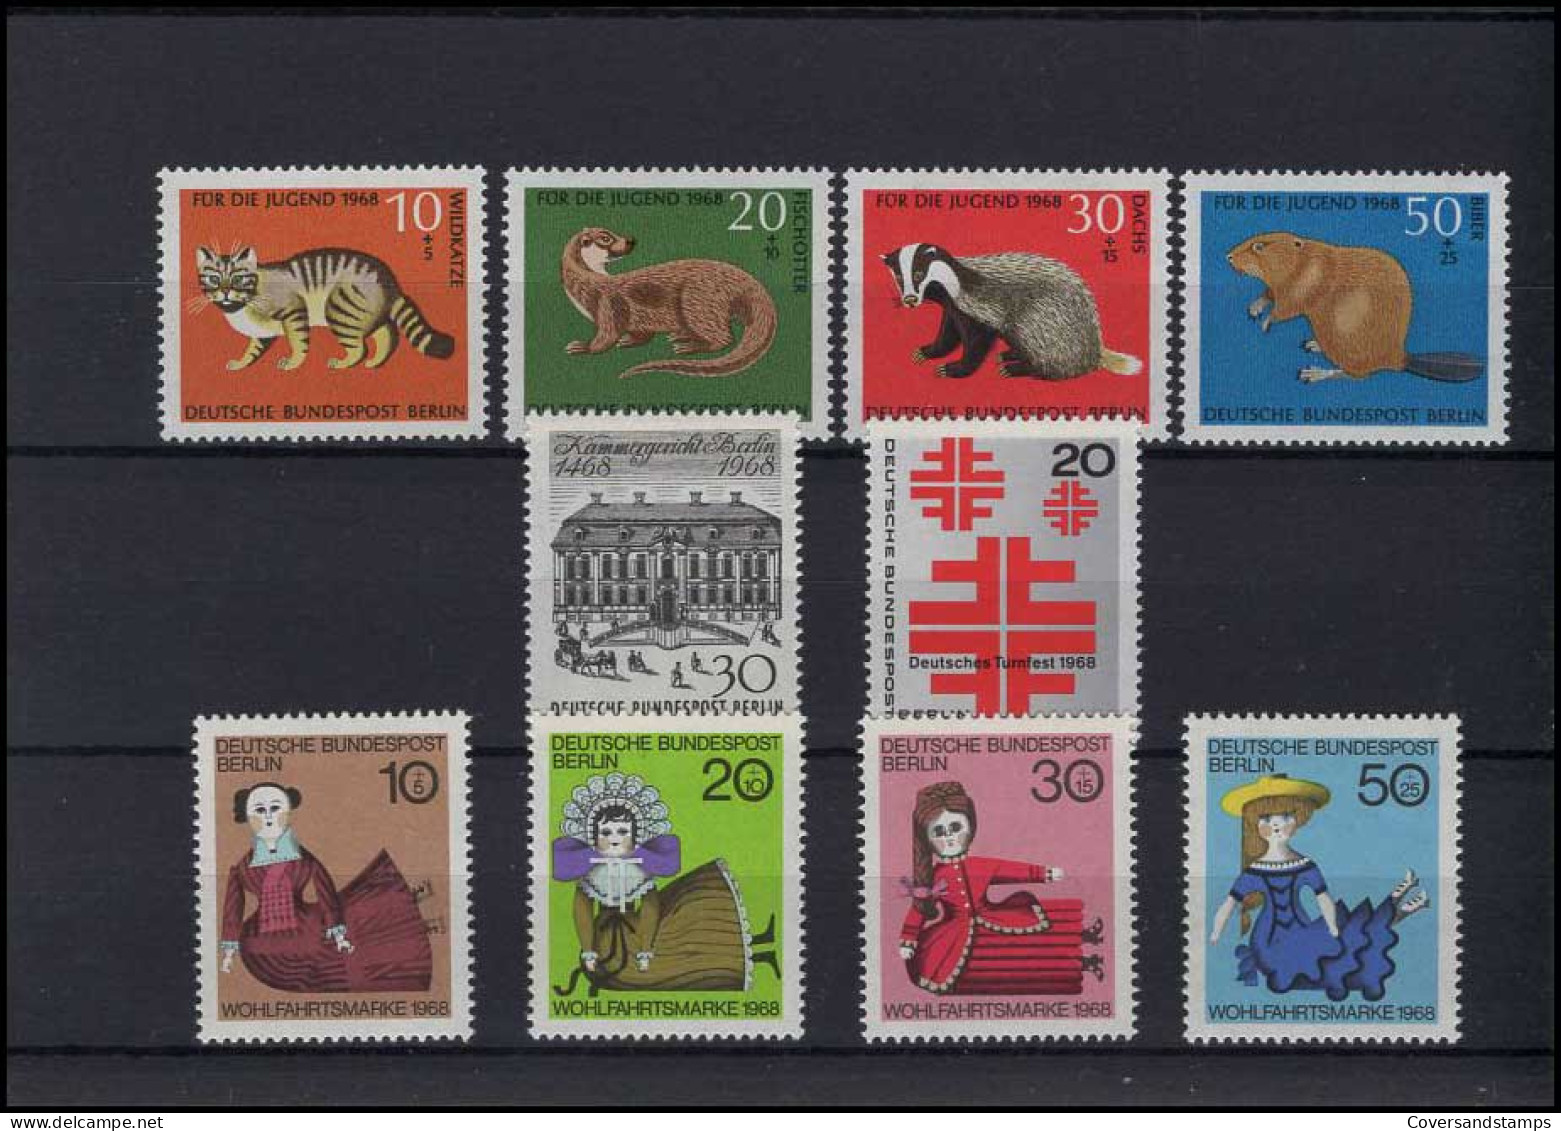   Bundespost Berlin - Volledig Jaar / Jahrgang 1968  MNH - Ongebruikt